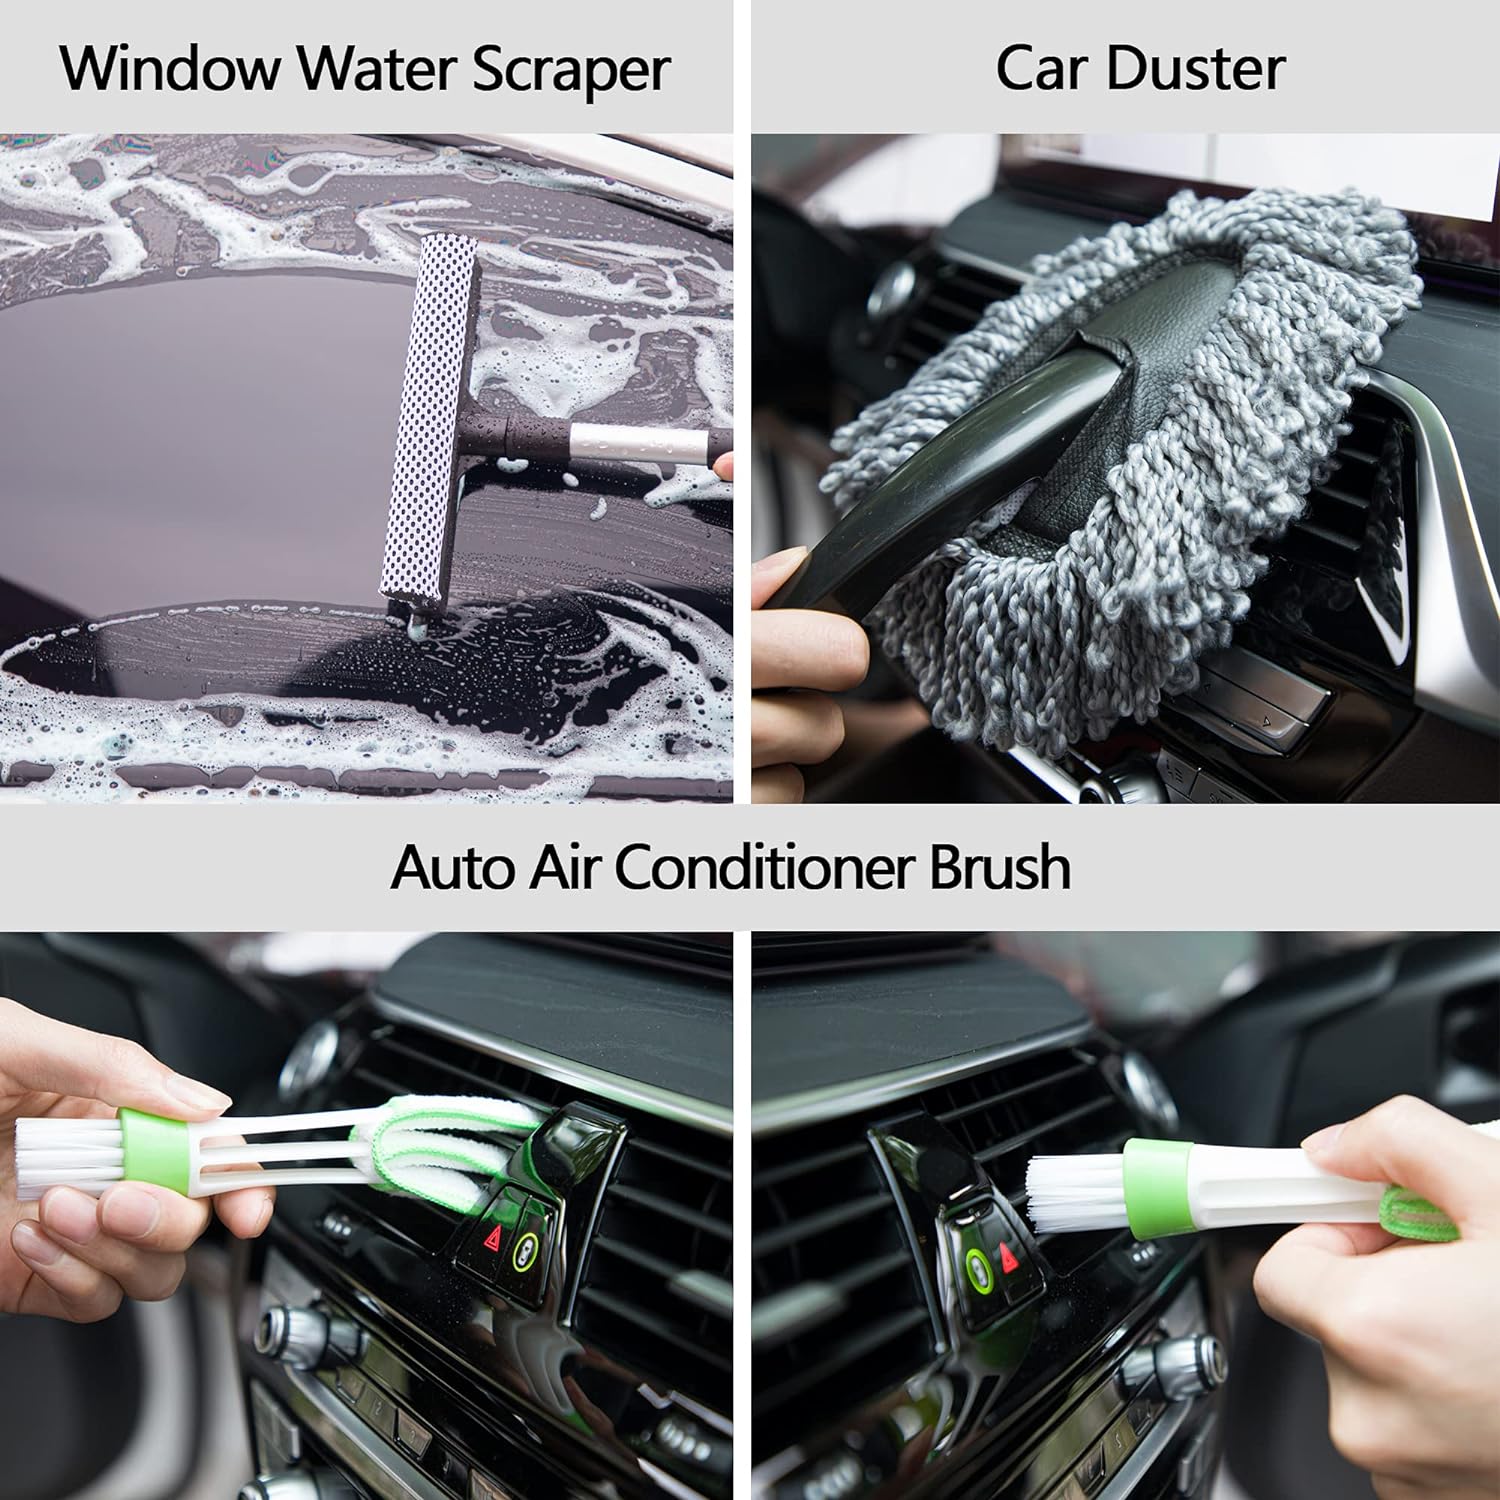 HLWDFLZ 27pcs Car Wash Cleaning Tools Kit Car Detailing Set - Blue Car Wash  Kit Interior and